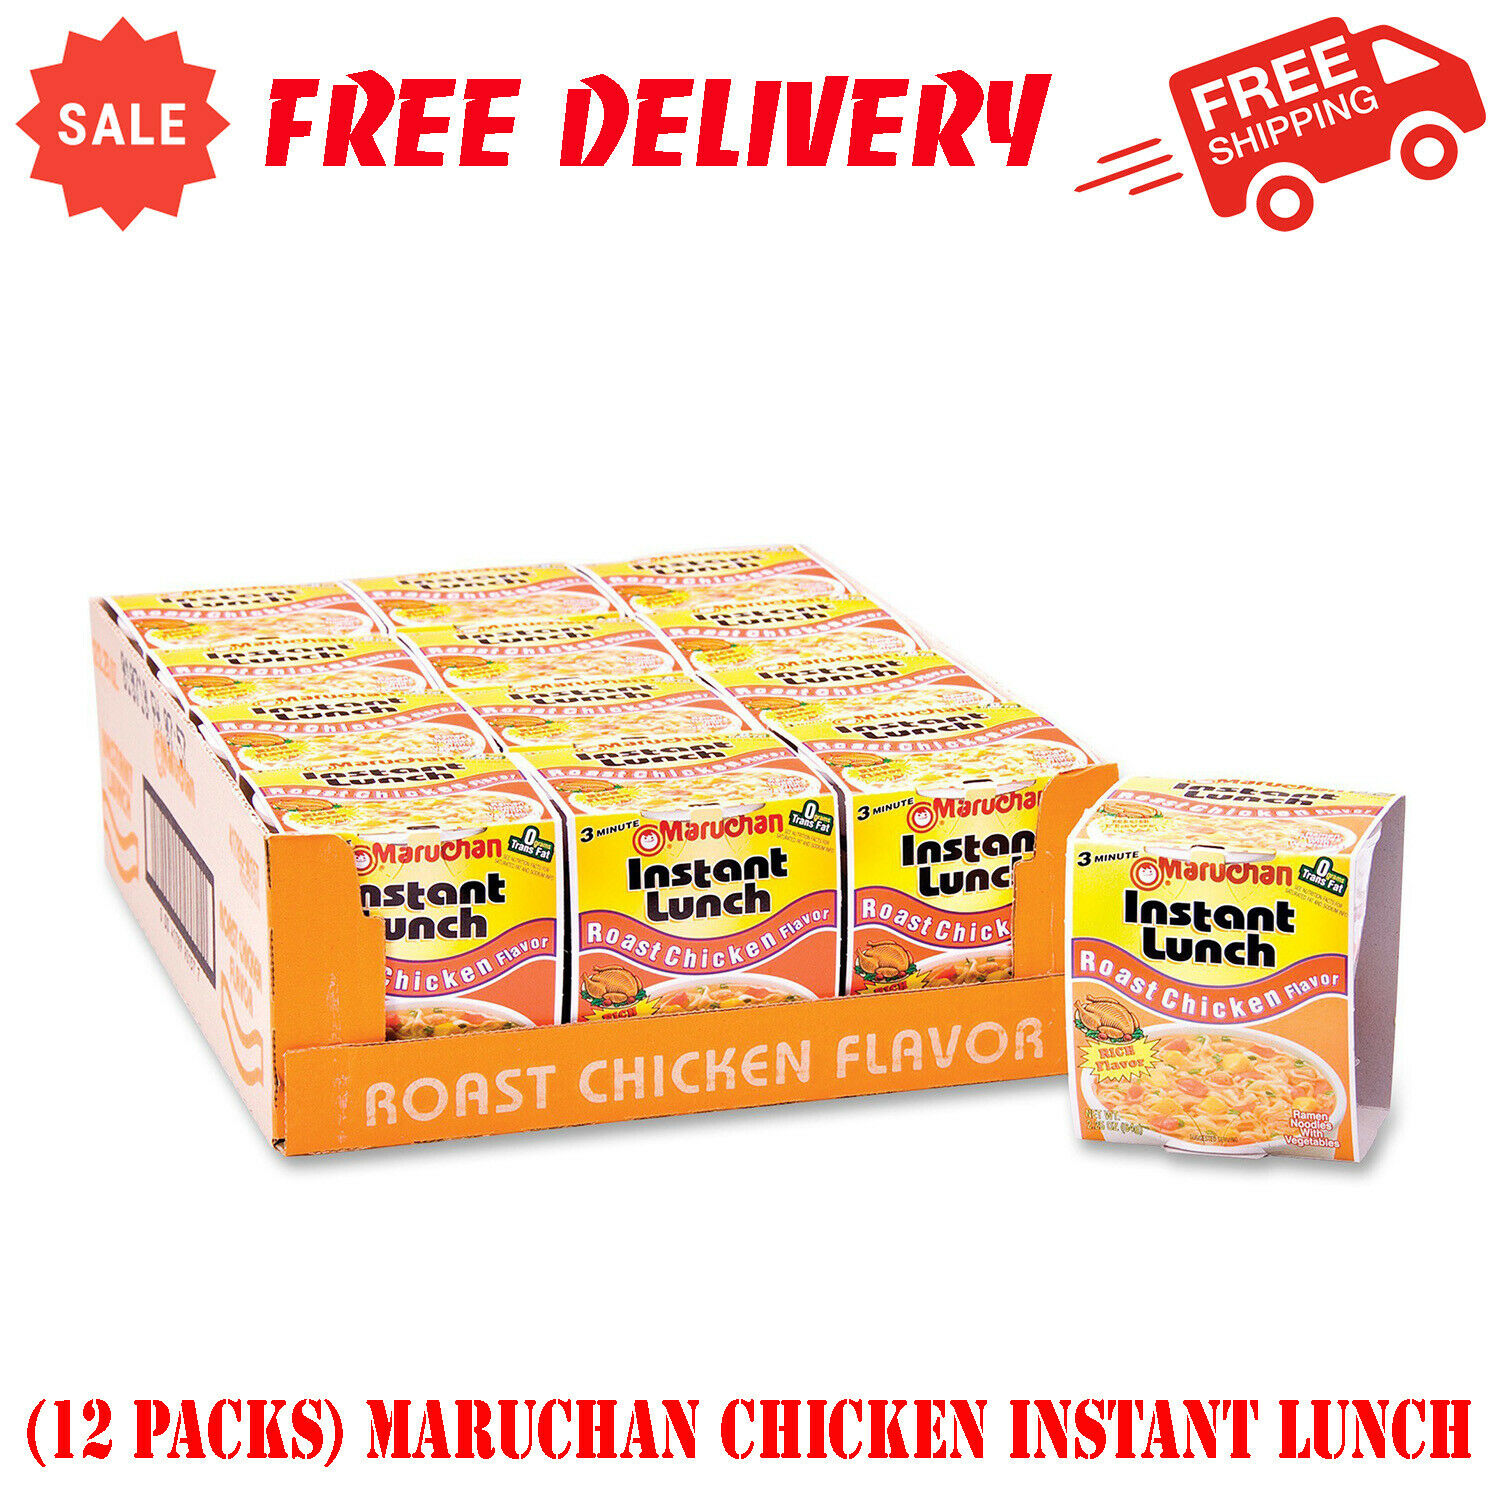 (12 Packs) Maruchan Chicken Instant Lunch, Ramen Noodles, Food - 2.25 oz Cup